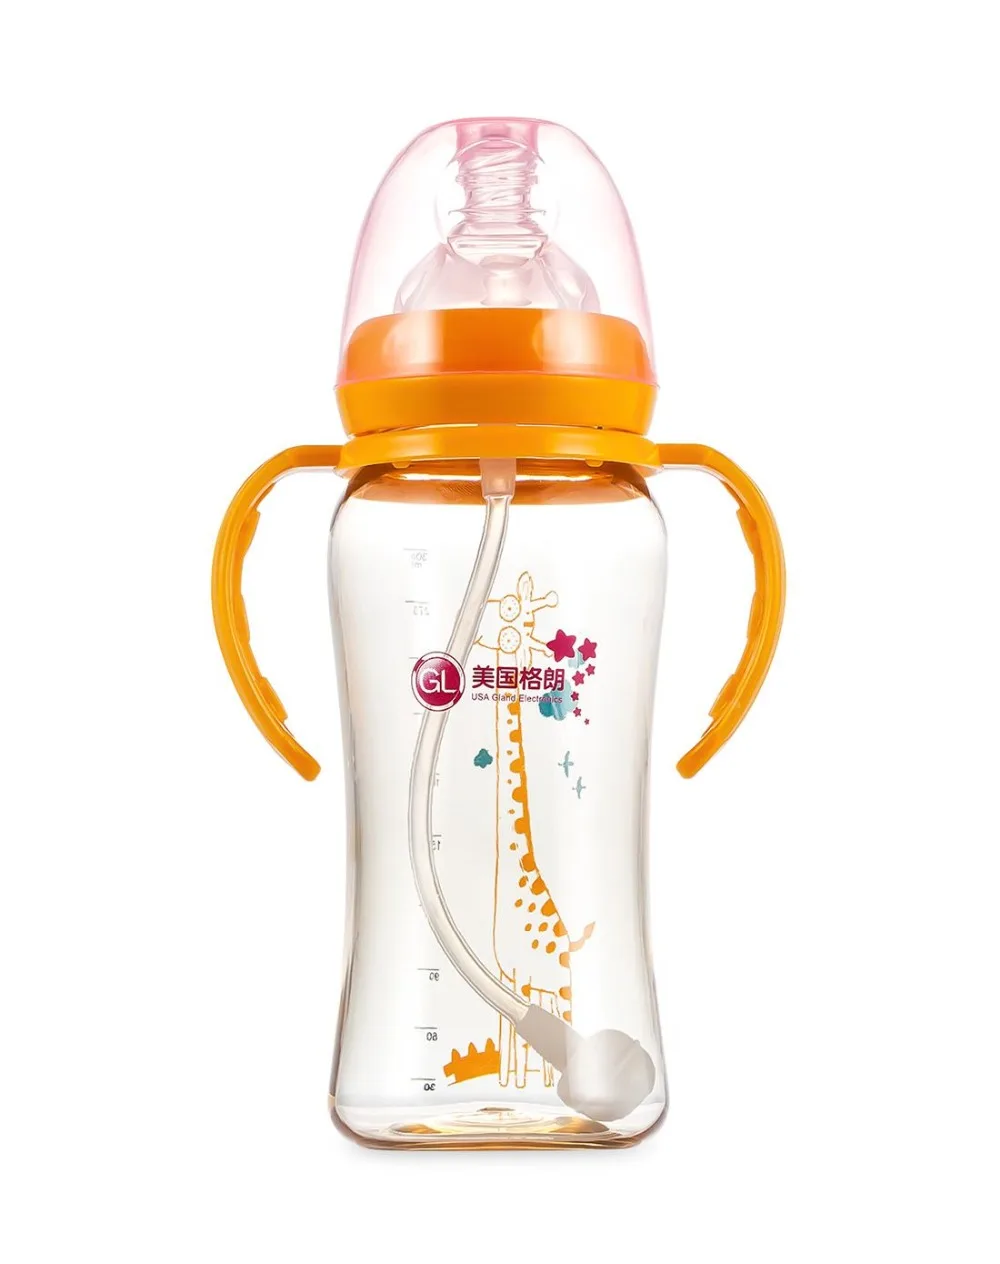 GL детская бутылочка для кормления 300 мл Бутылочка для молока для младенцев PP Уход За Младенцами безопасный мамадеирас фруктовый стакан для сока Garrafa